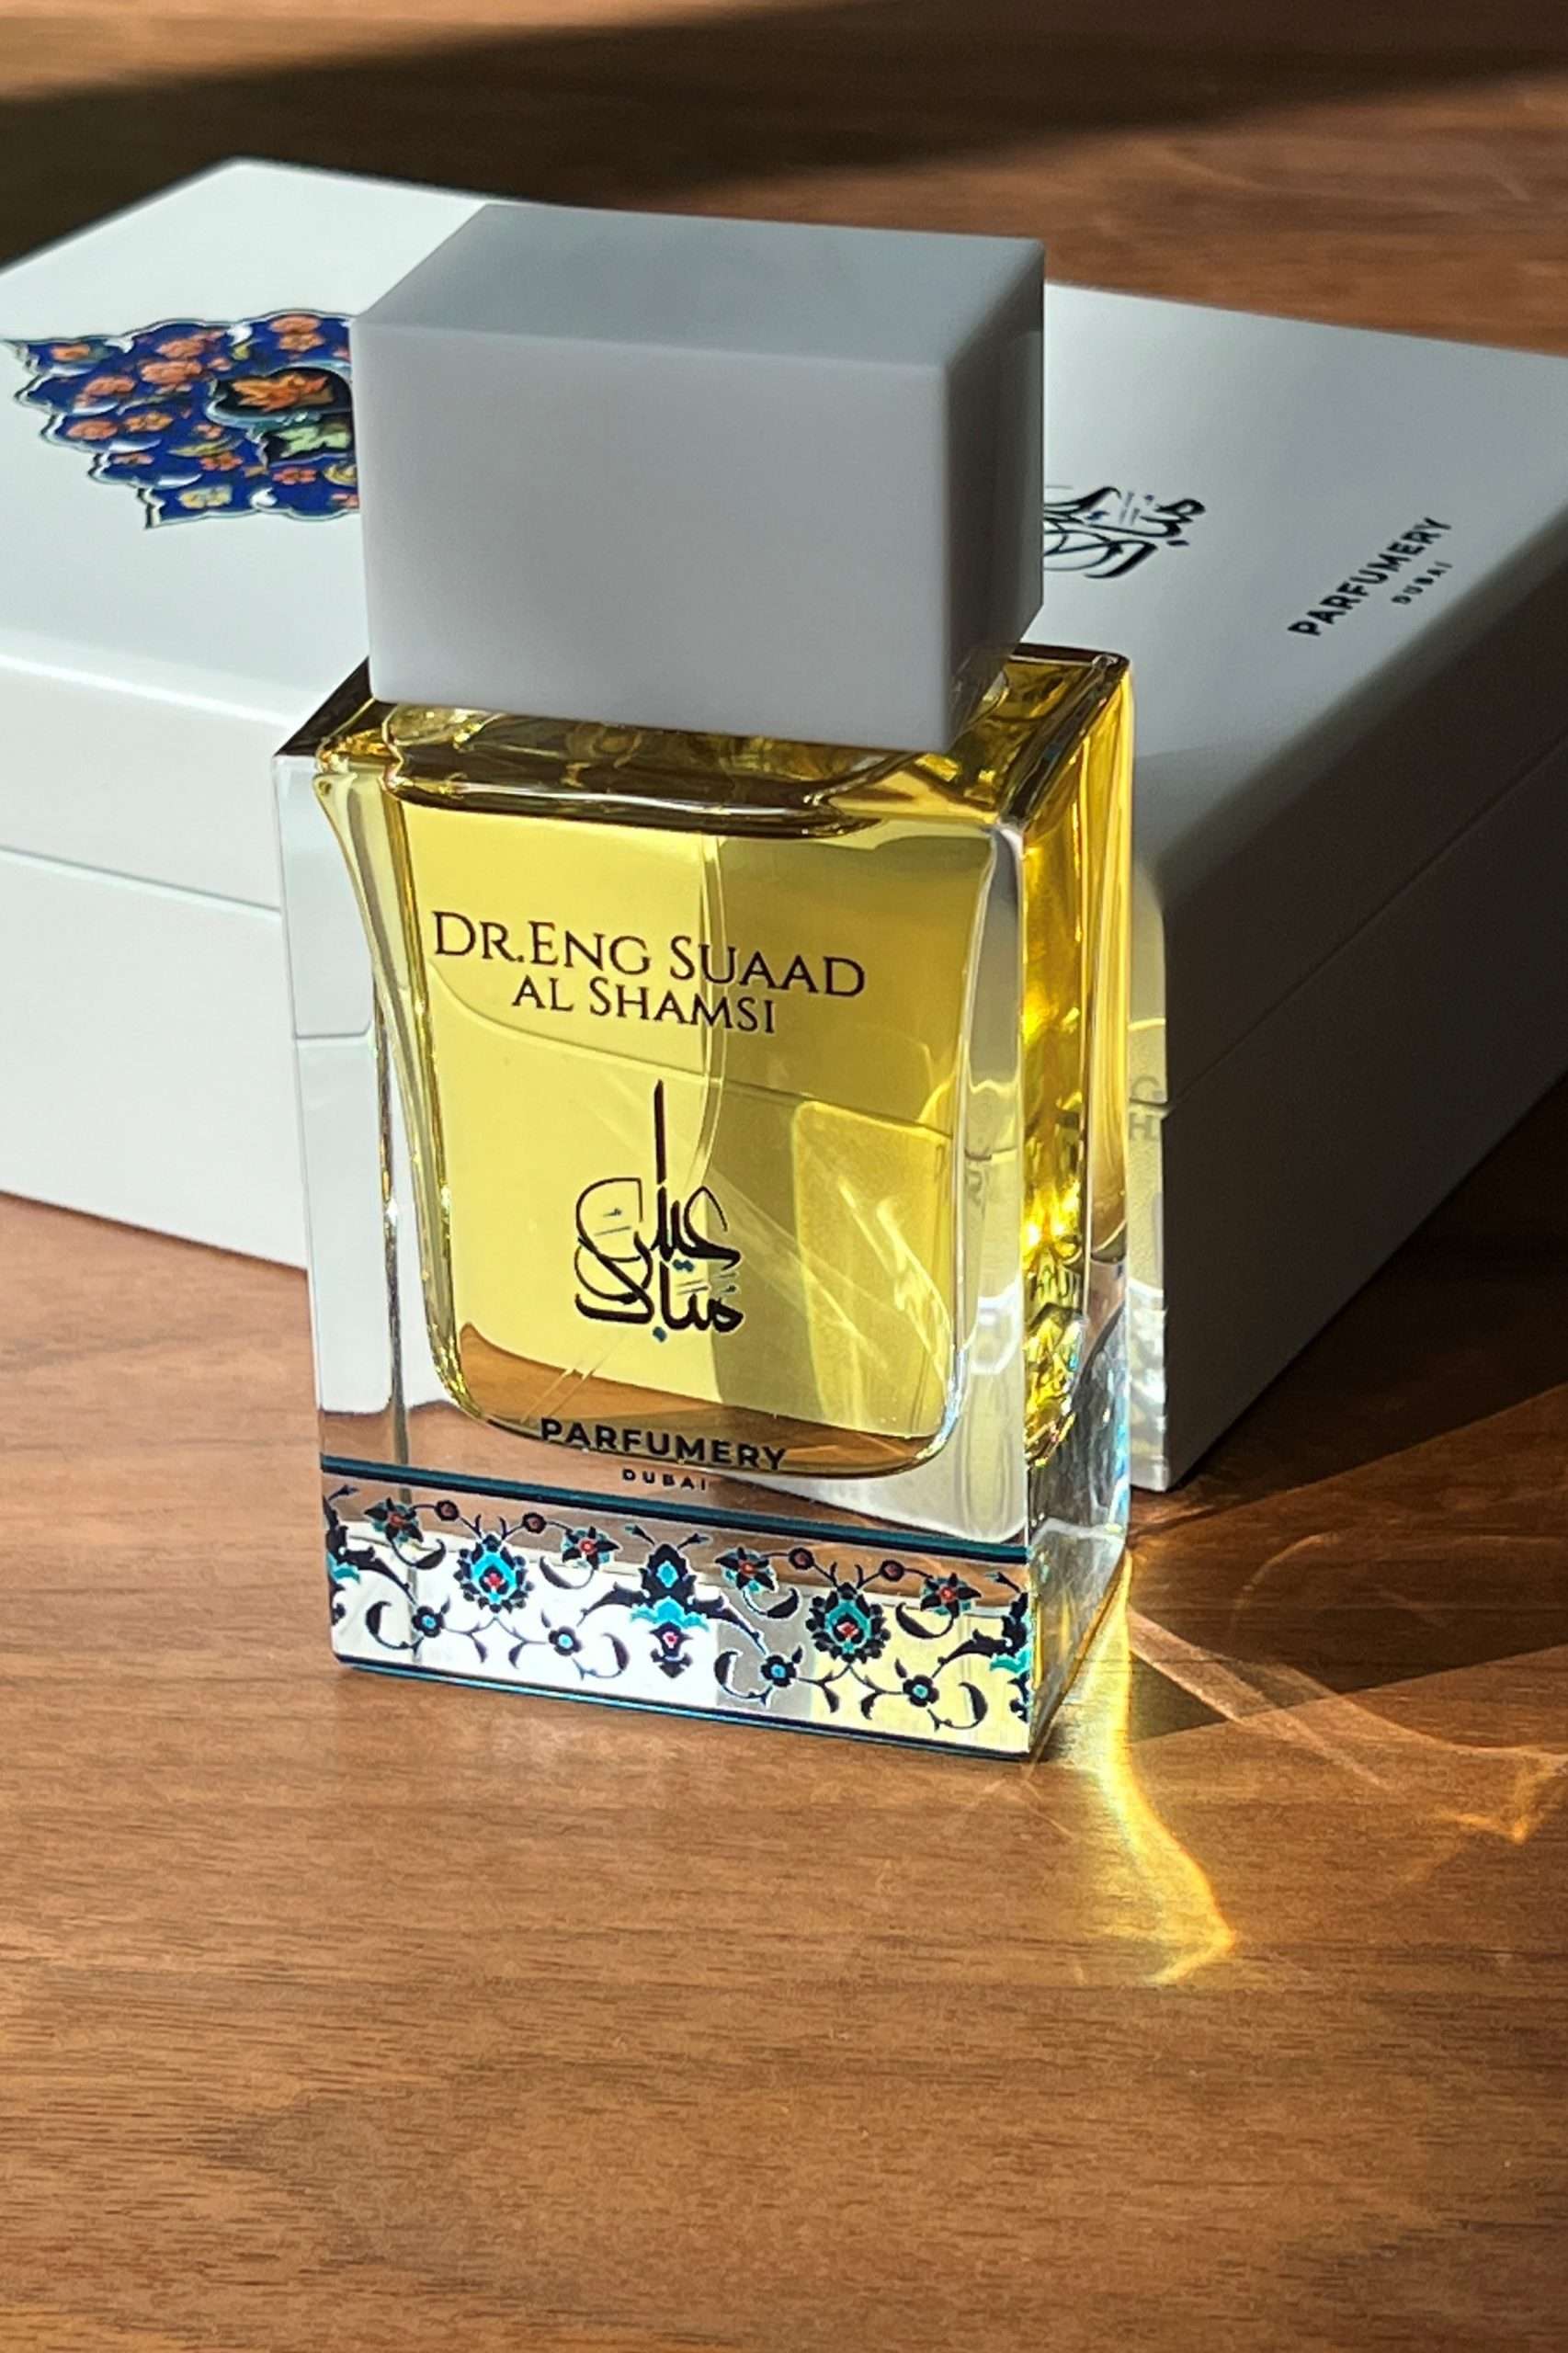 Spray Chergui 100 ml  Luxury Candle Collection Vents d'Arabie